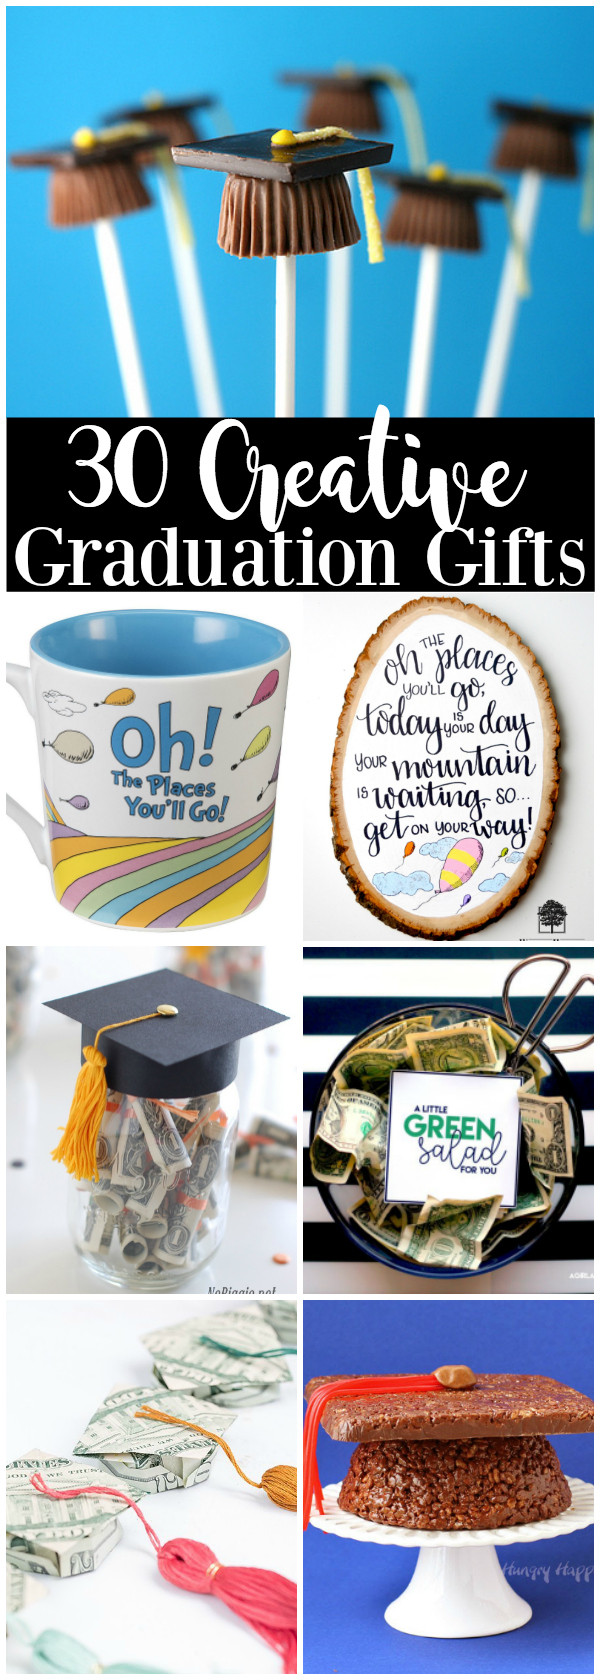 Gift Ideas For Graduation Party
 30 Creative Graduation Gift Ideas